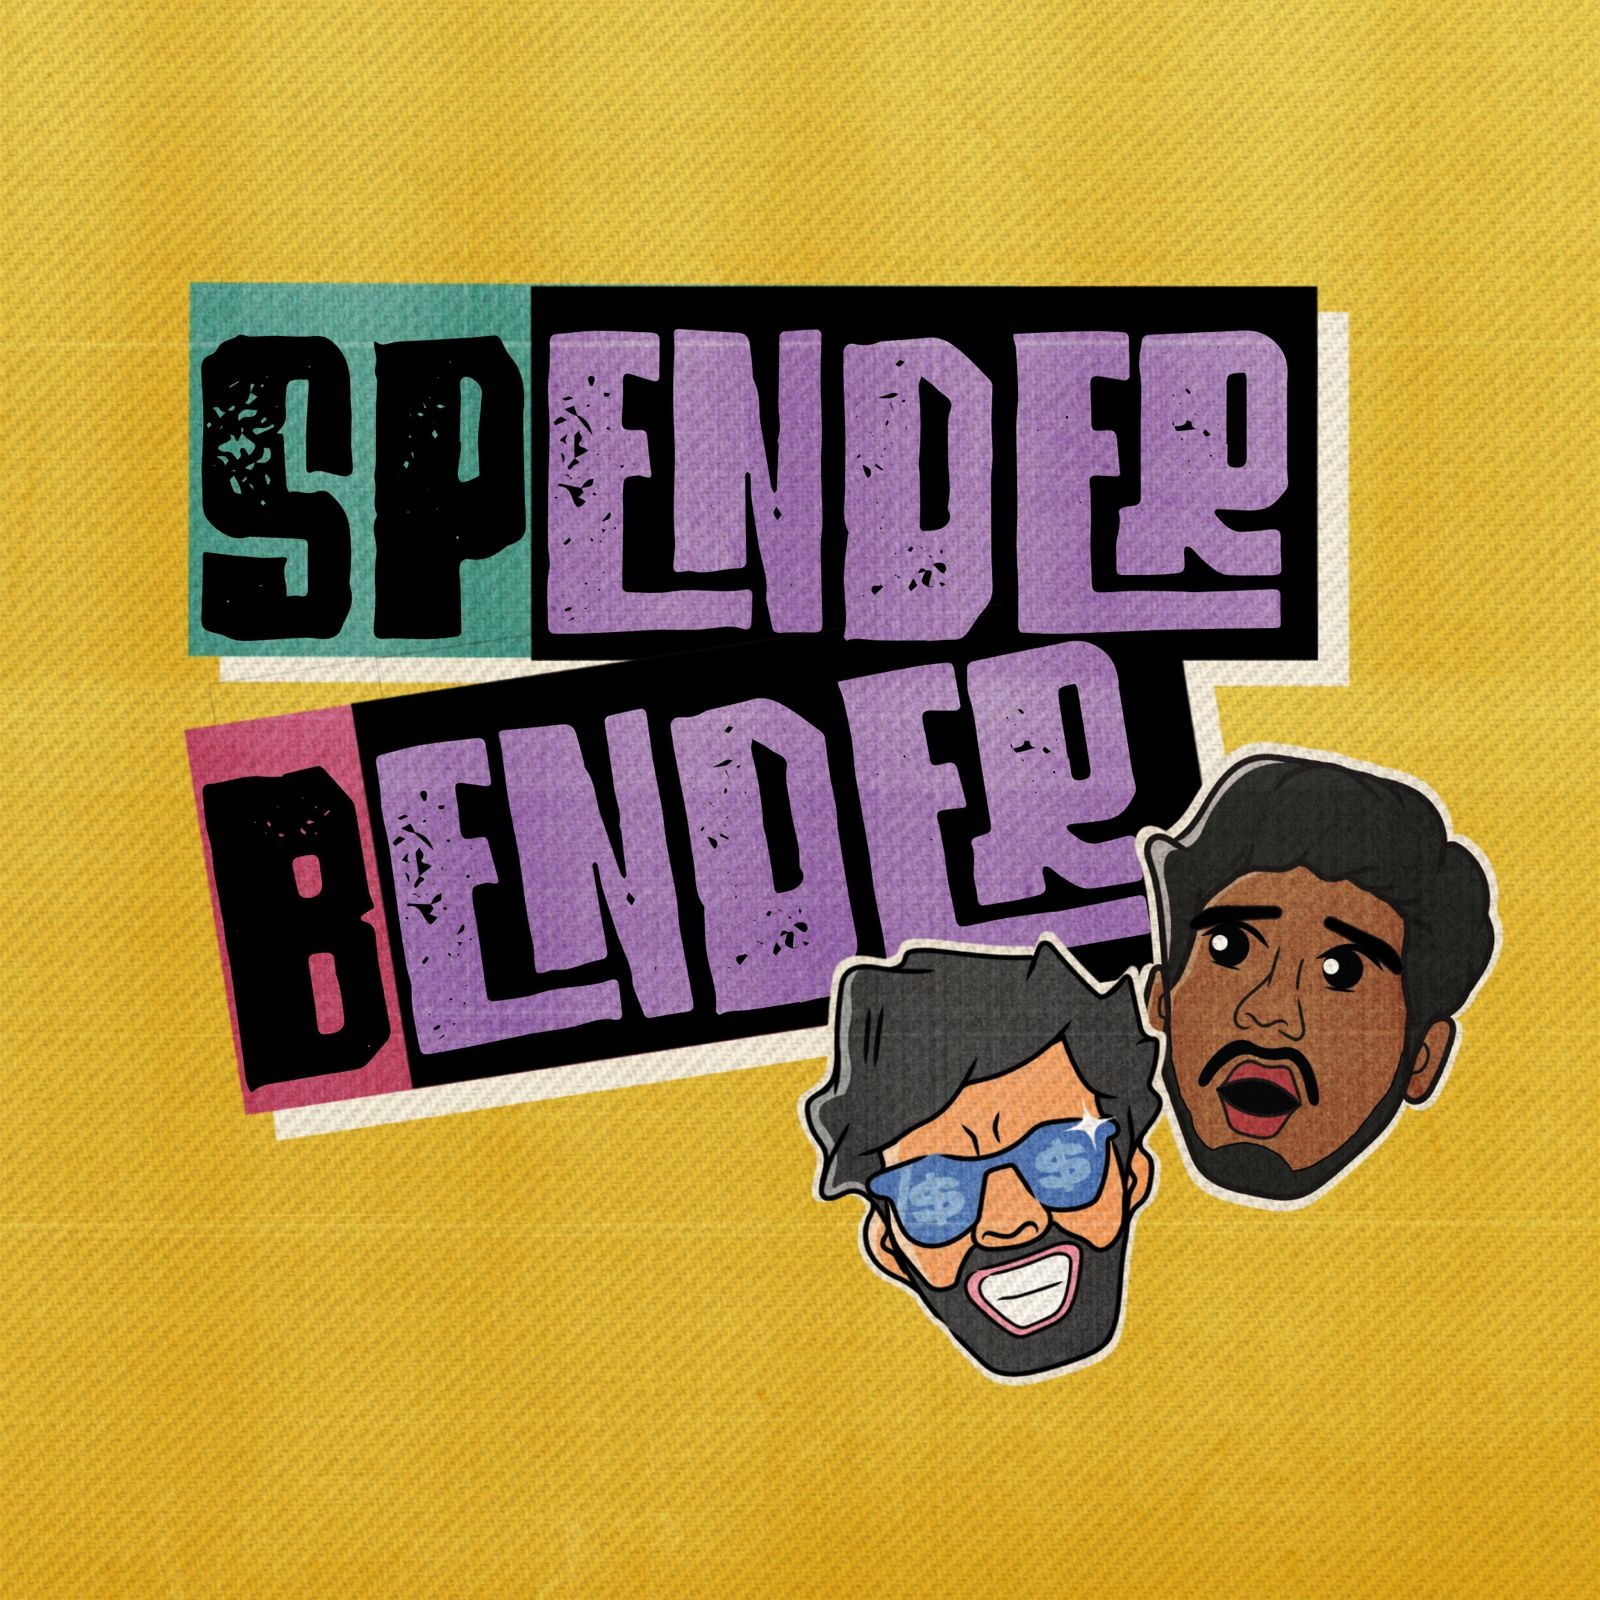 Spender Bender